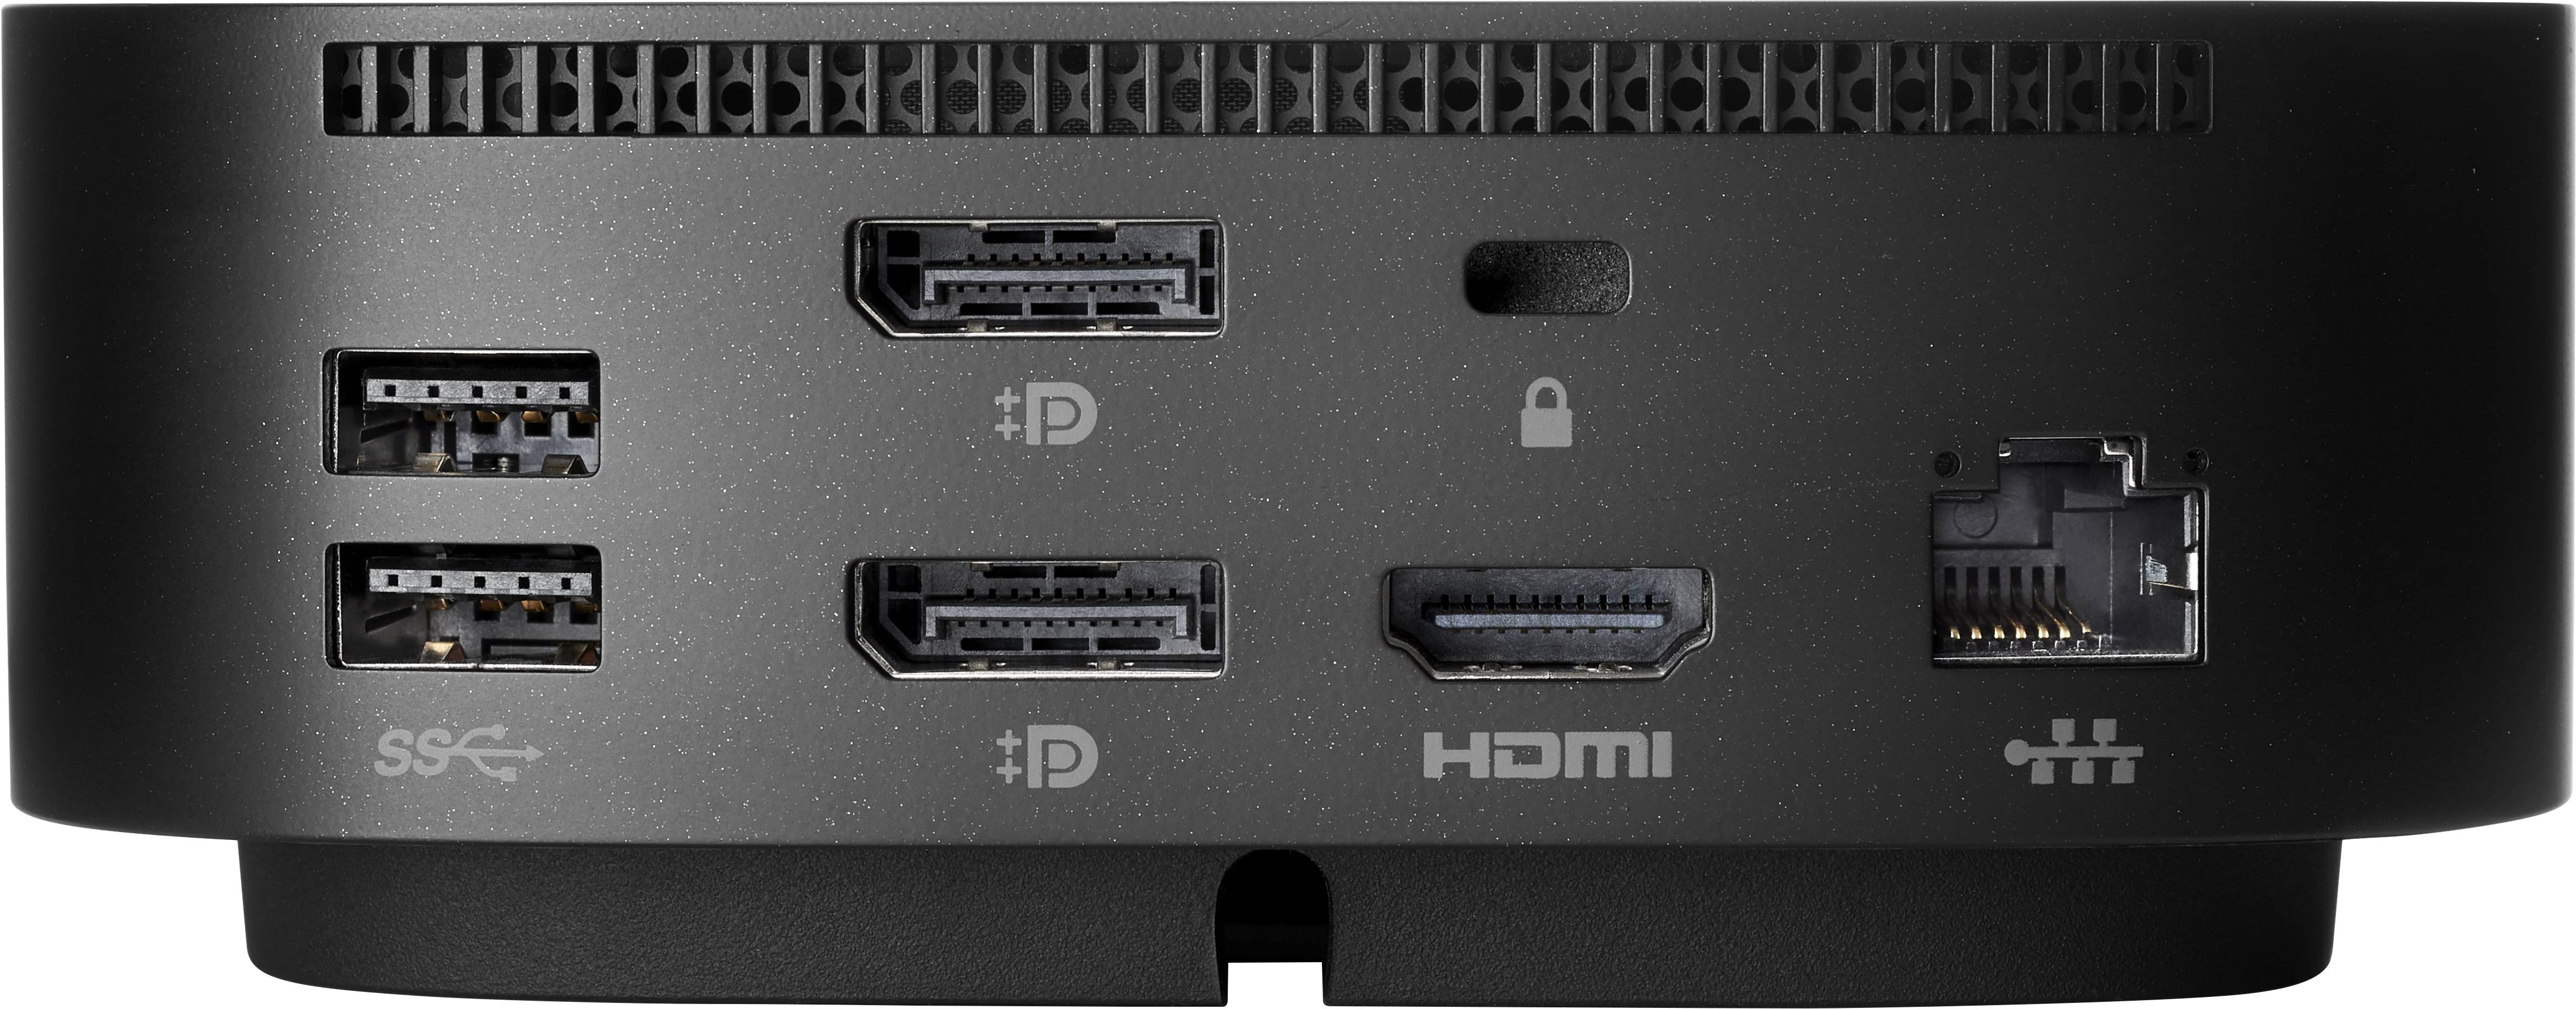 Rca Informatique - image du produit : HP USB-C DOCK G5 F/ DEDICATED NOTEBOOK